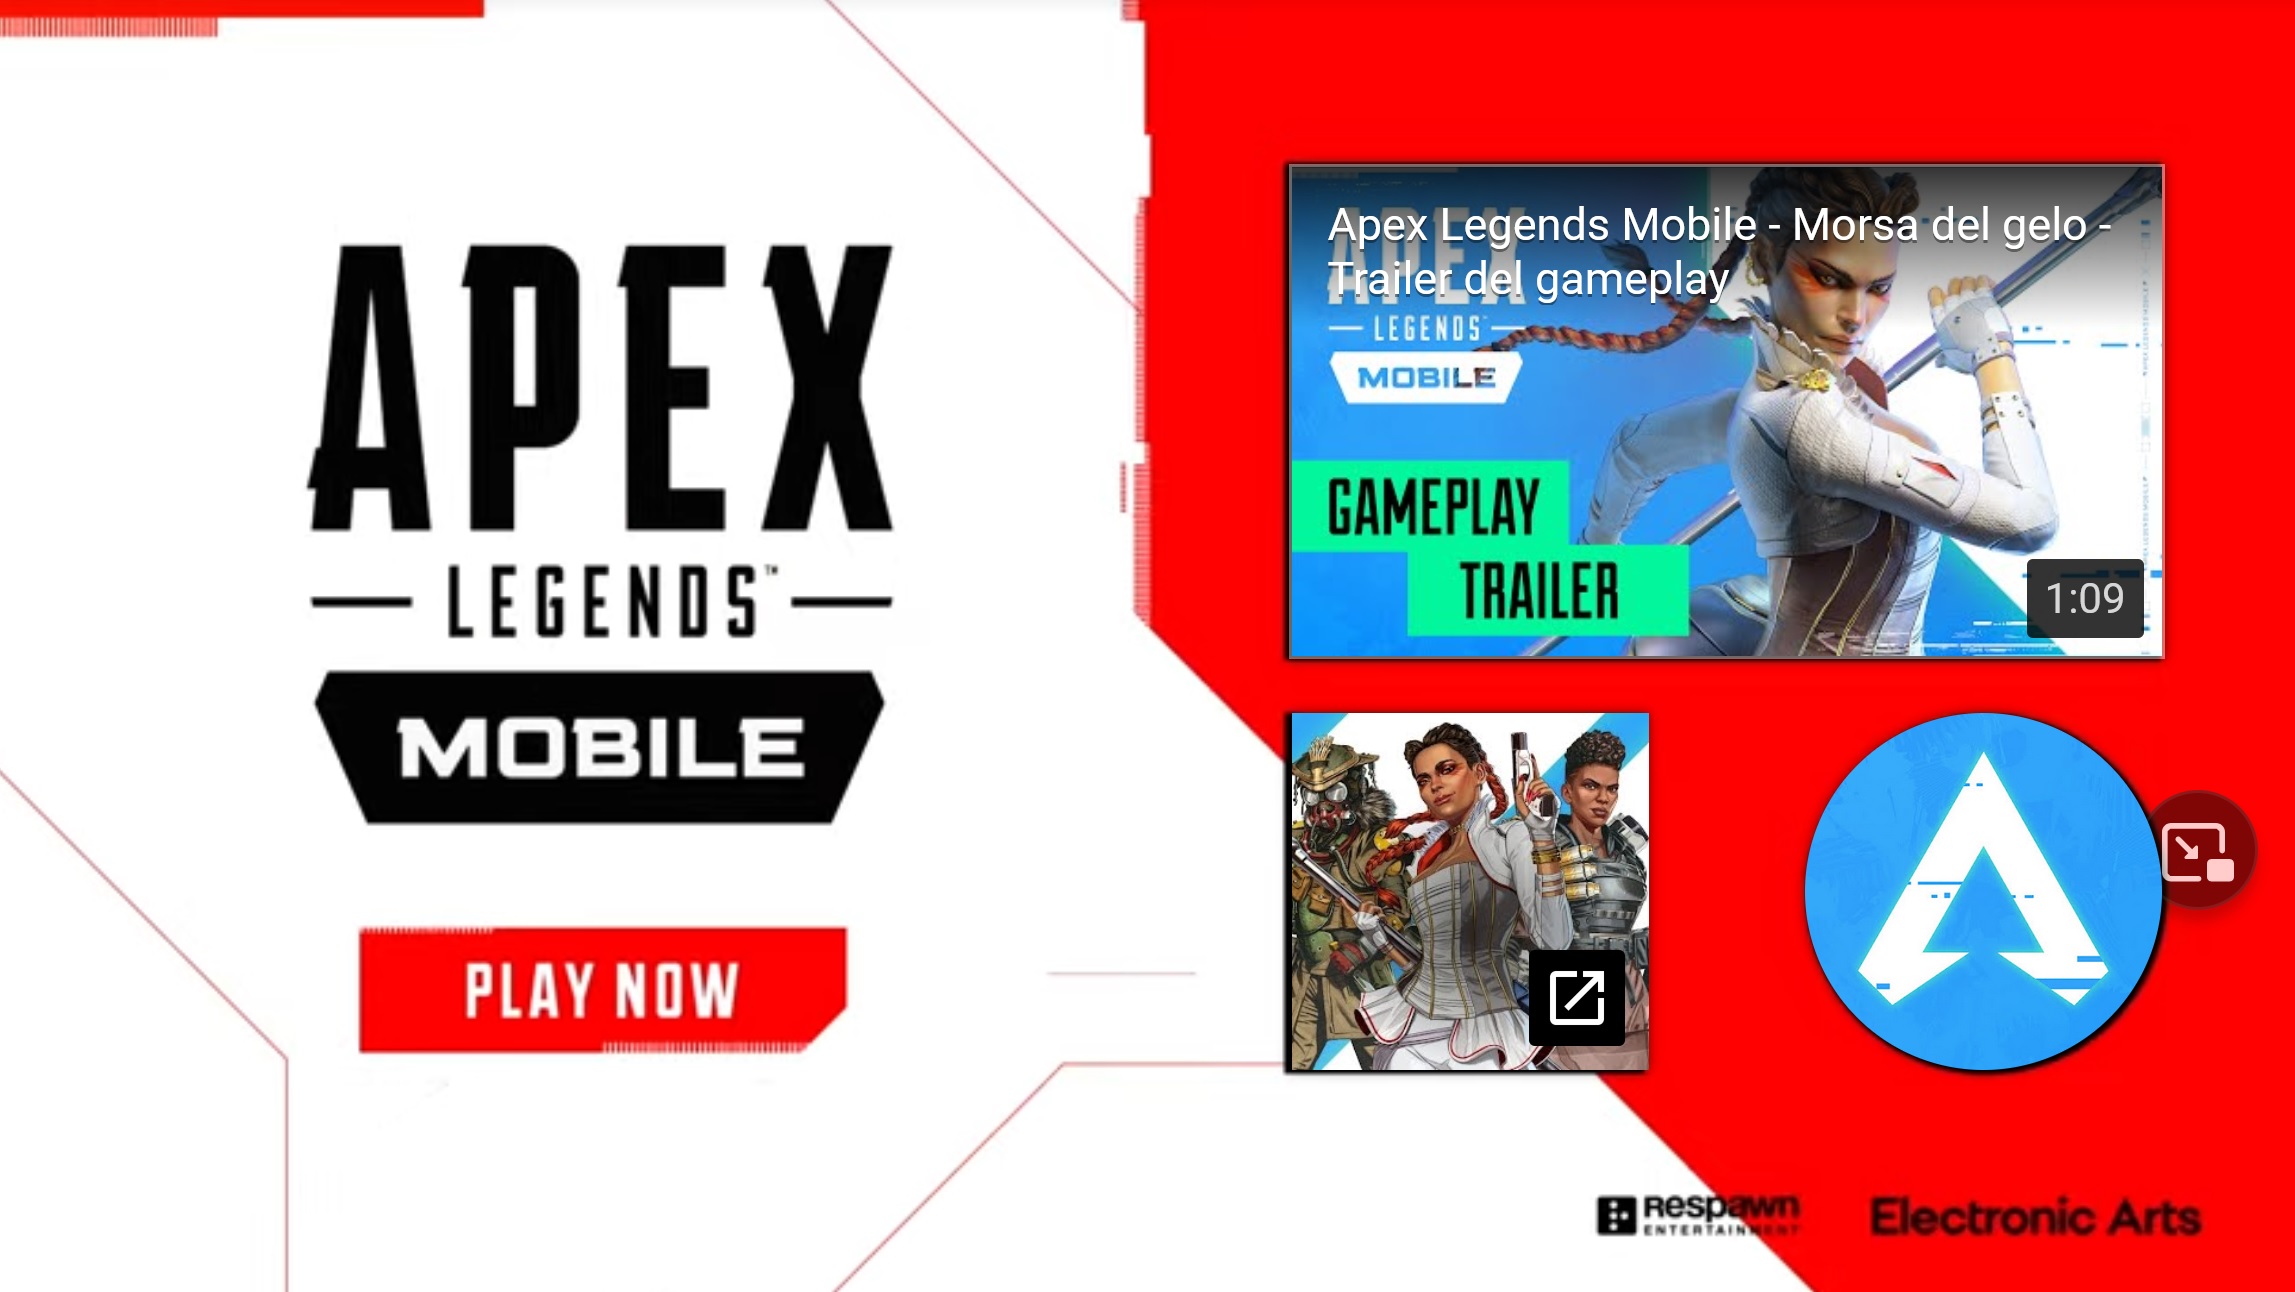 Nuova leggenda per Apex Legends Mobile